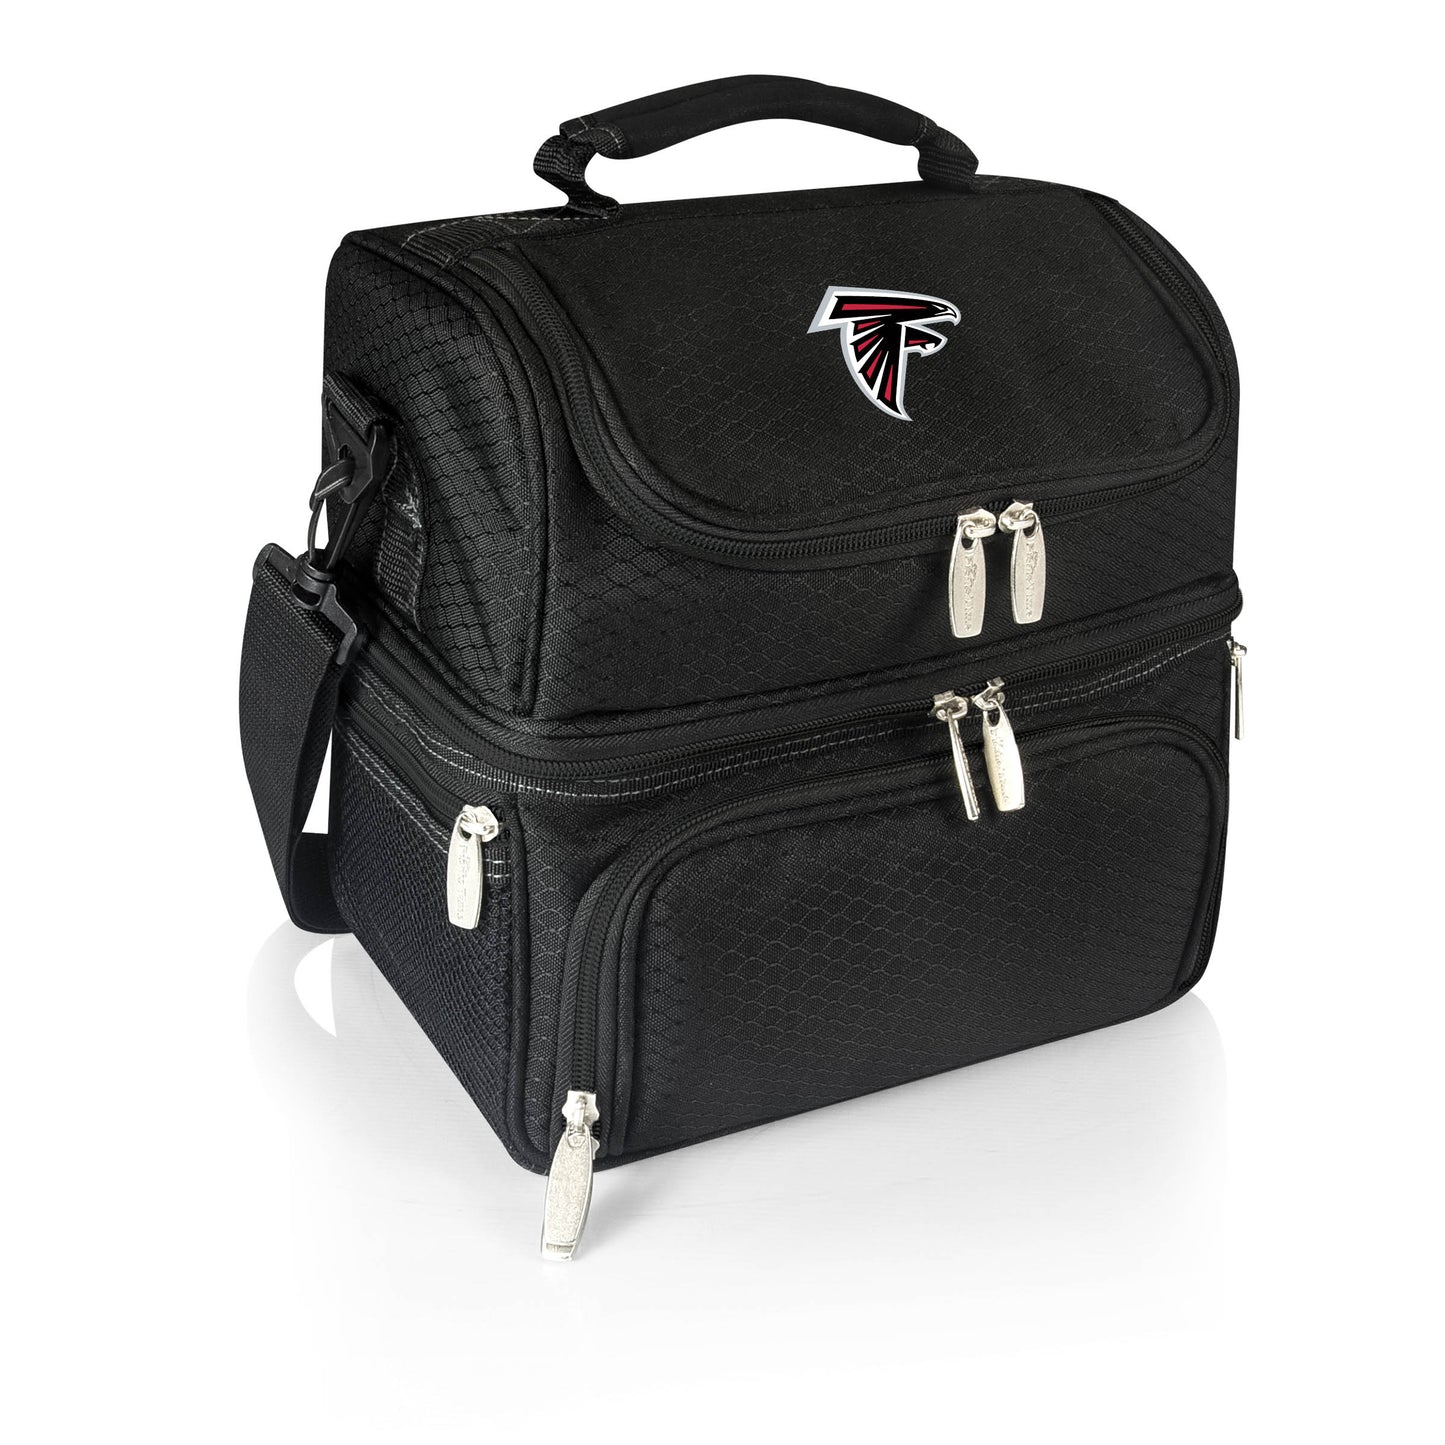 Atlanta Falcons - Pranzo Lunch Cooler Bag